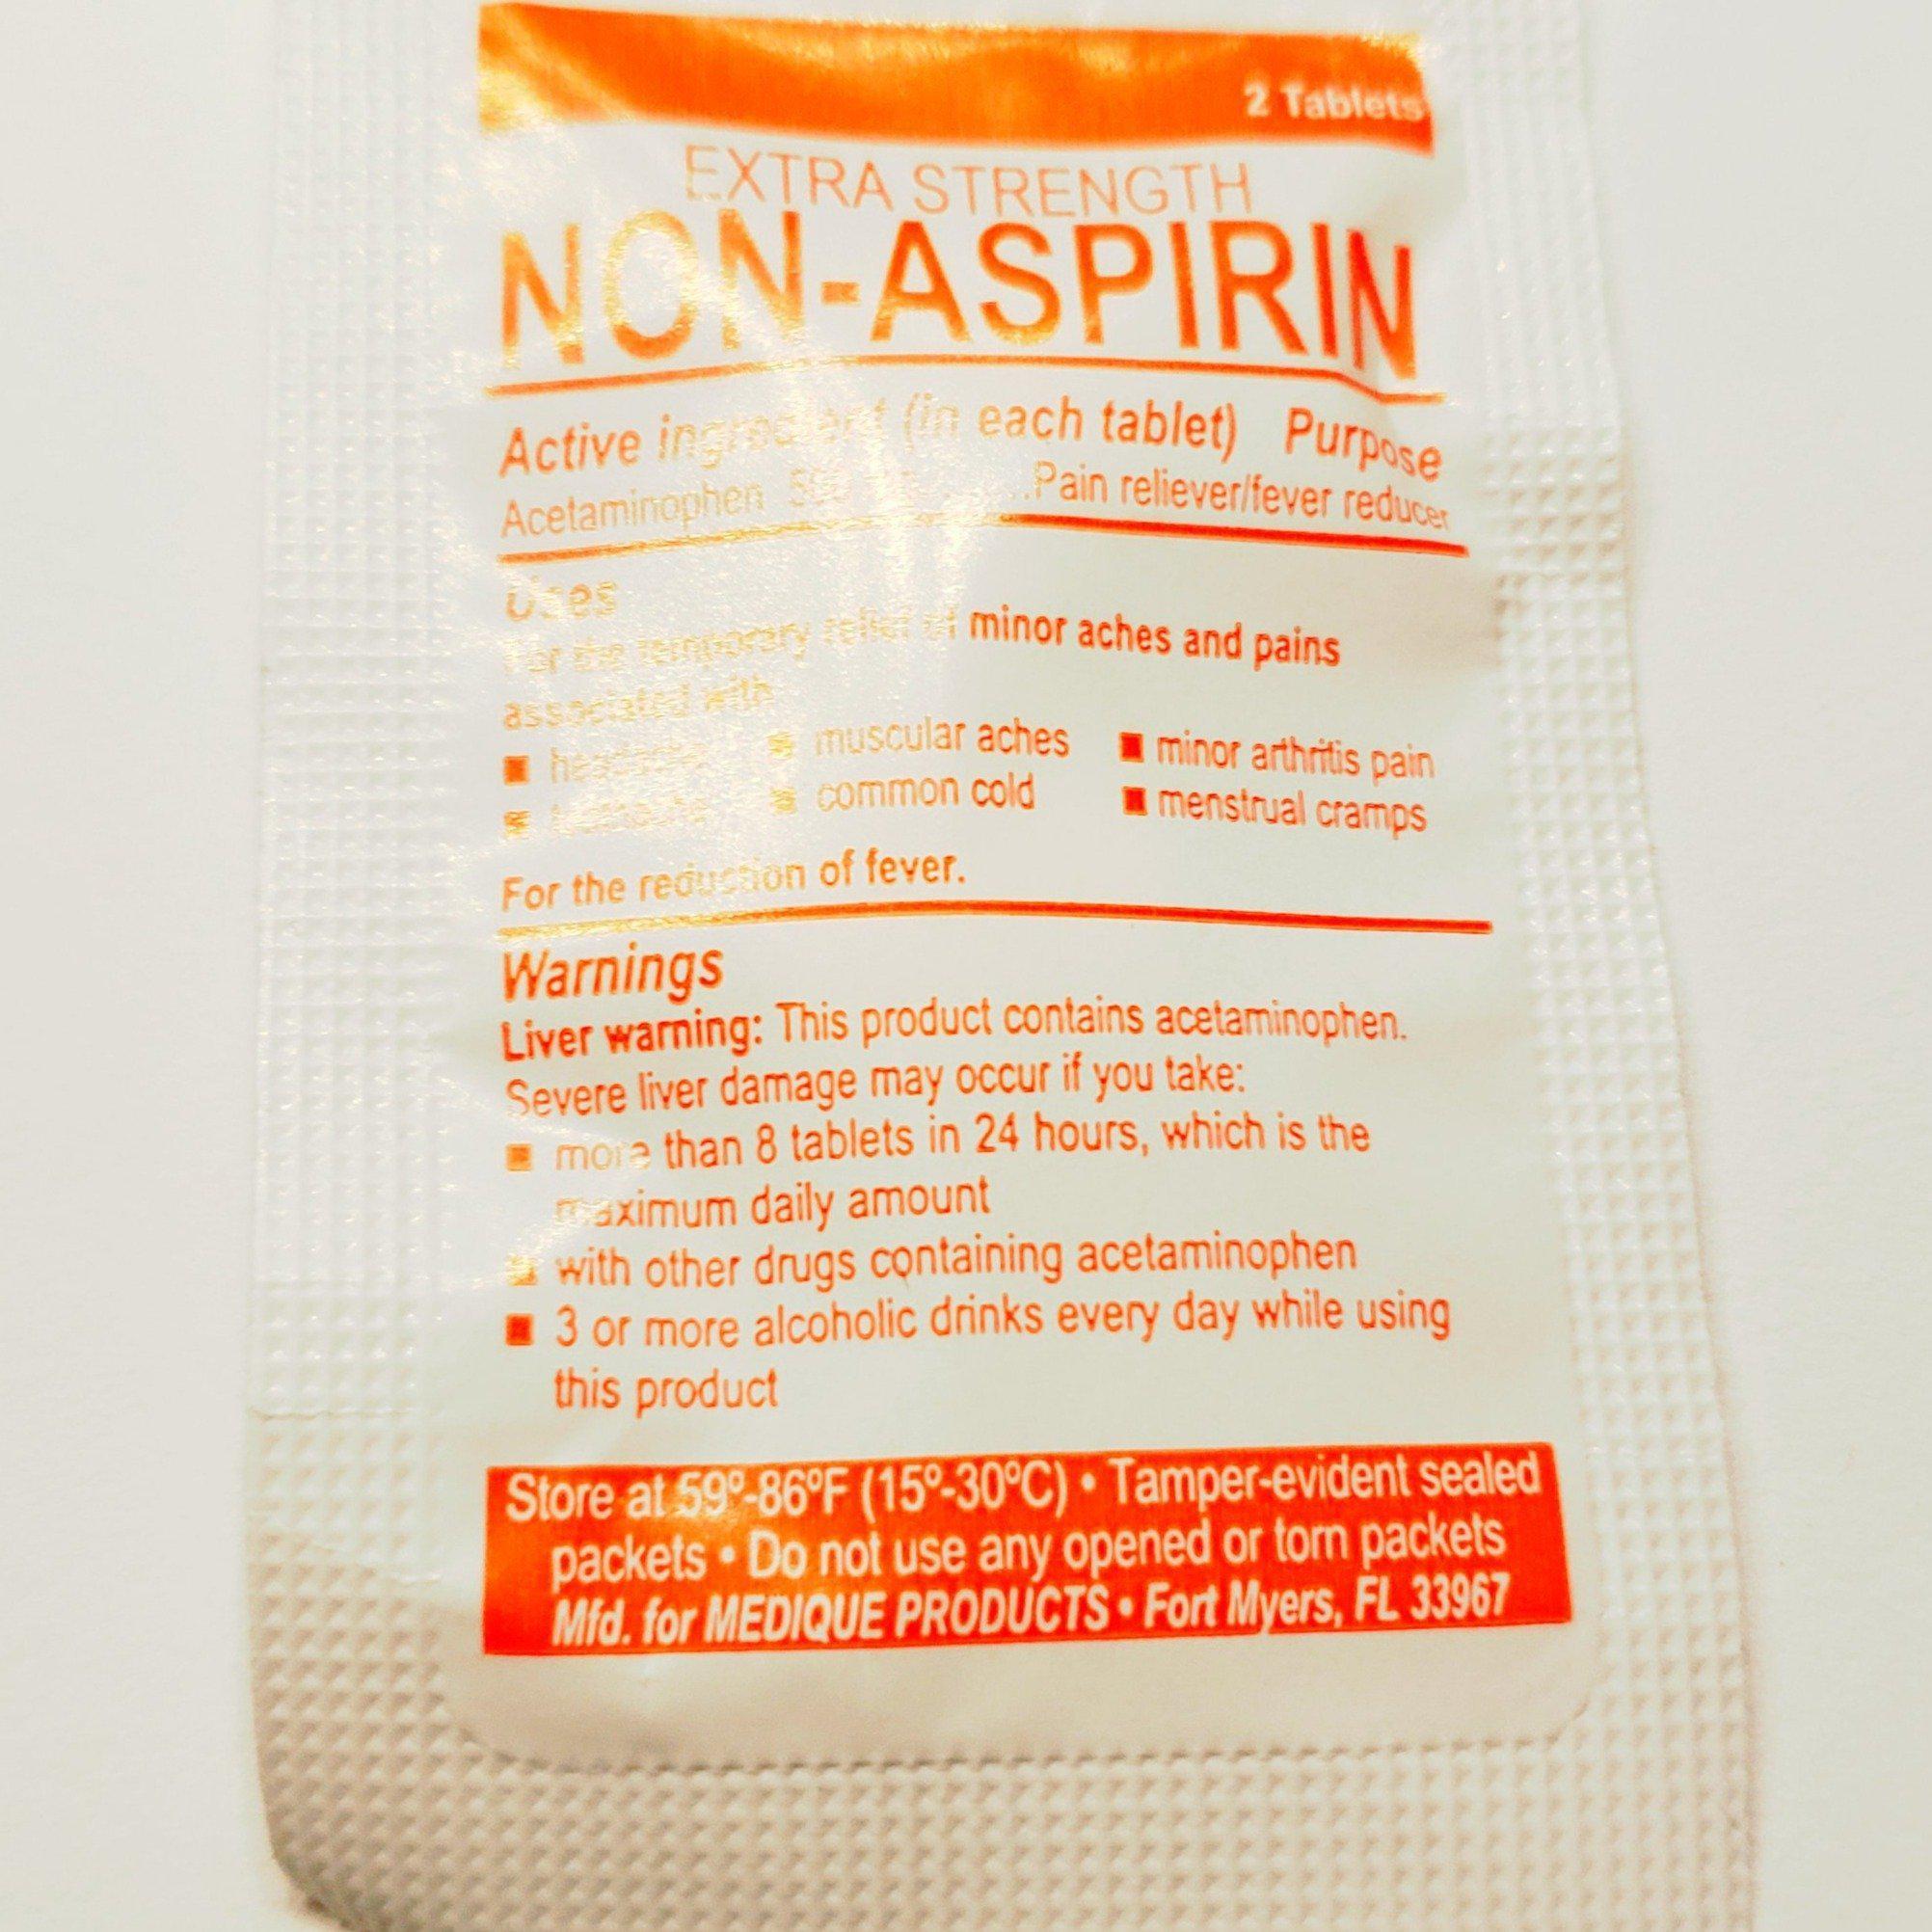 Non Aspirin pain reliever 2 tablets-Grimworkshop-bugoutbag-bushcraft-edc-gear-edctool-everydaycarry-survivalcard-survivalkit-wilderness-prepping-toolkit